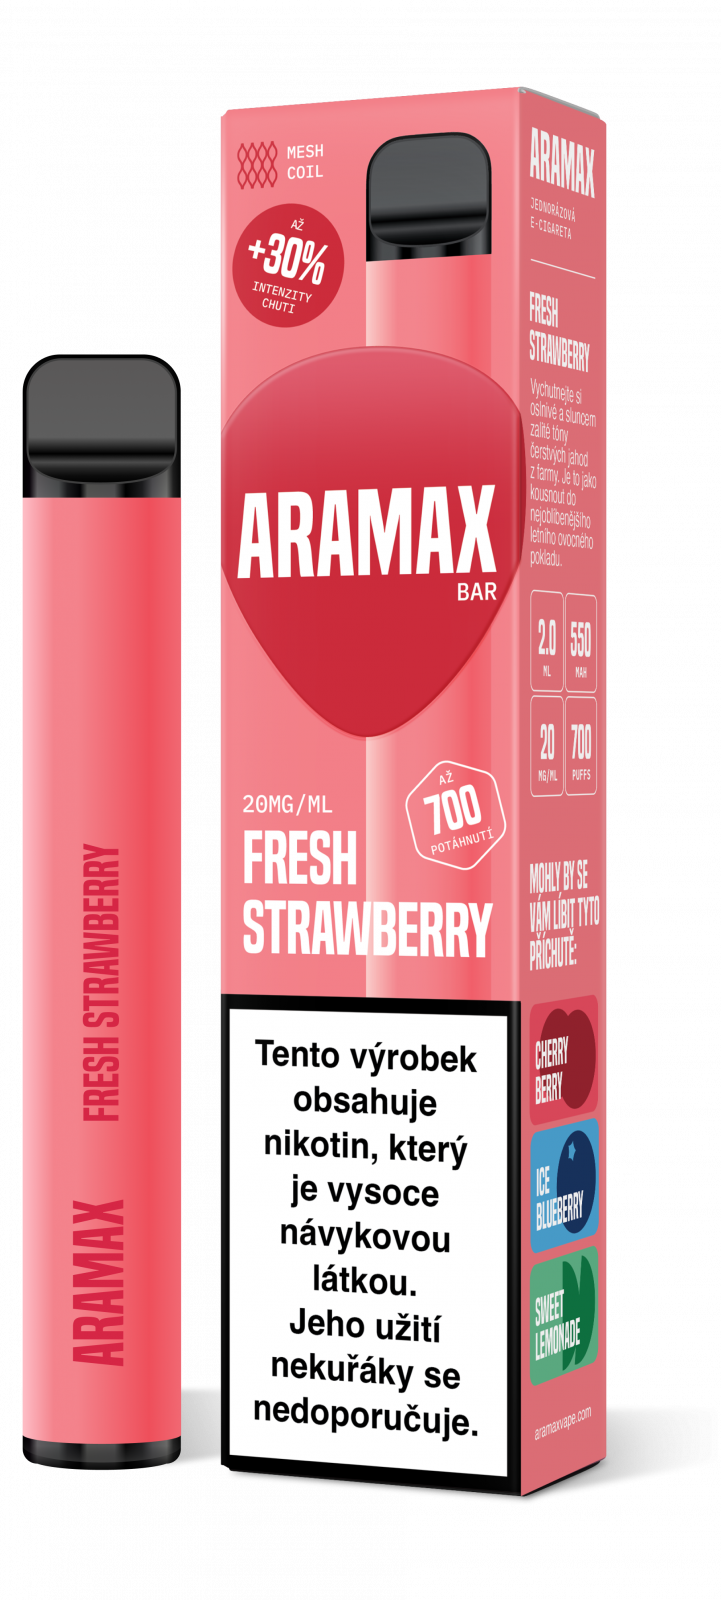 FRESH STRAWBERRY 20mg/ml - Aramax Bar 700